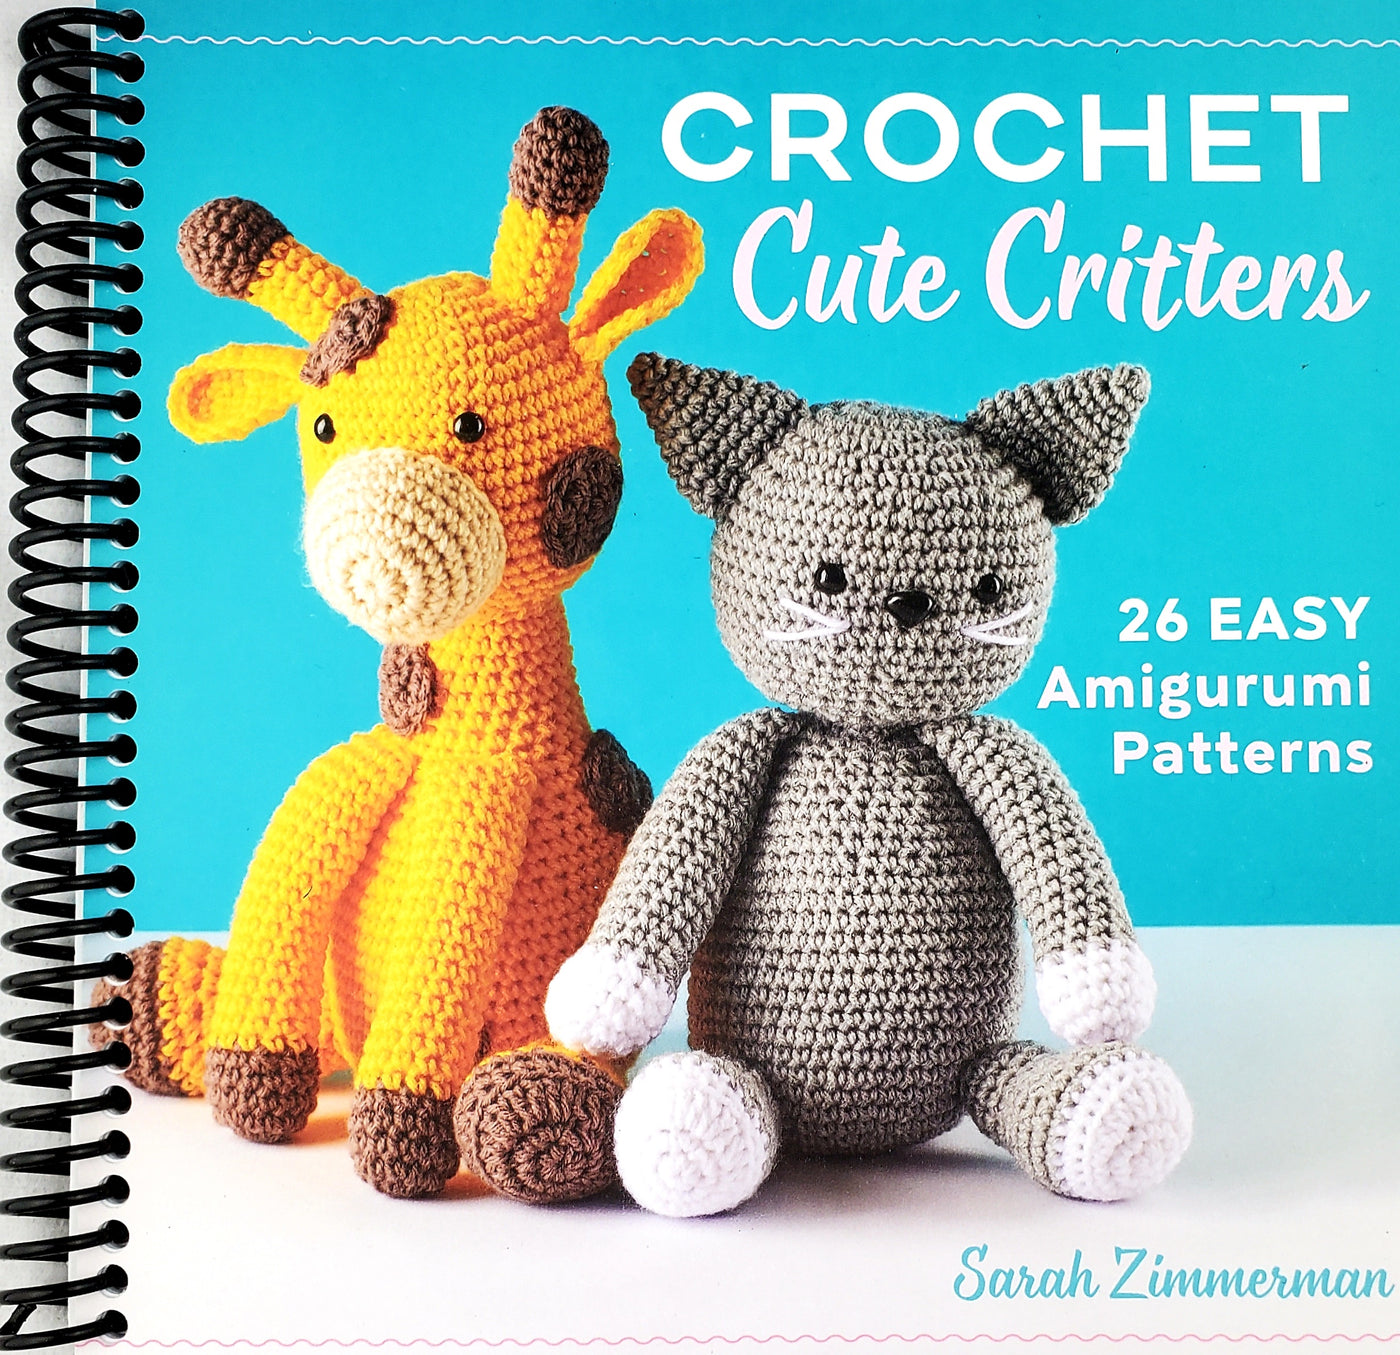 Crochet Cute Critters: 26 Easy Amigurumi Patterns (Spiral Bound)